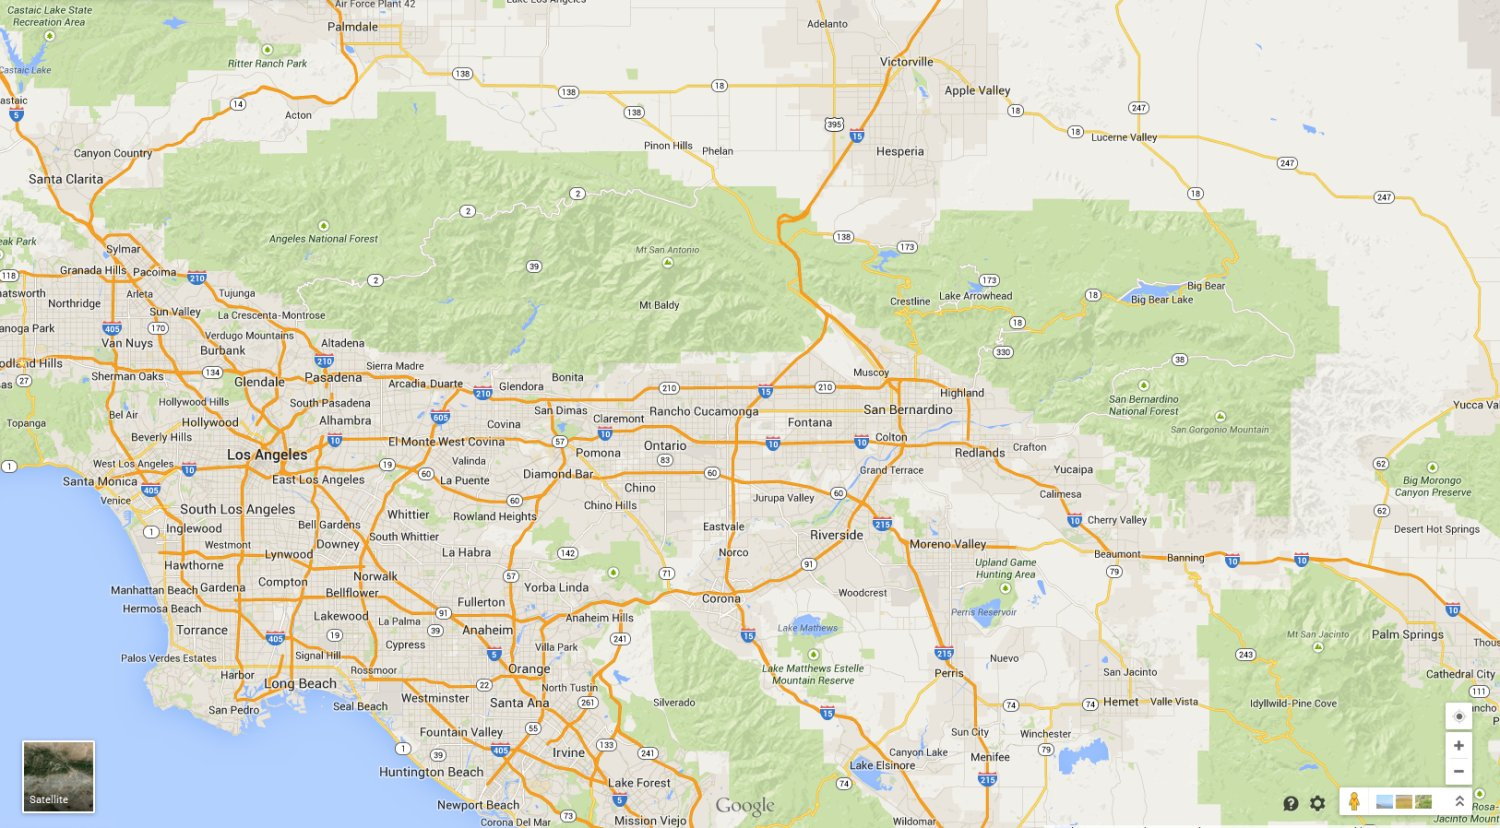 Google Map Los Angeles California - Klipy - La California Google Maps